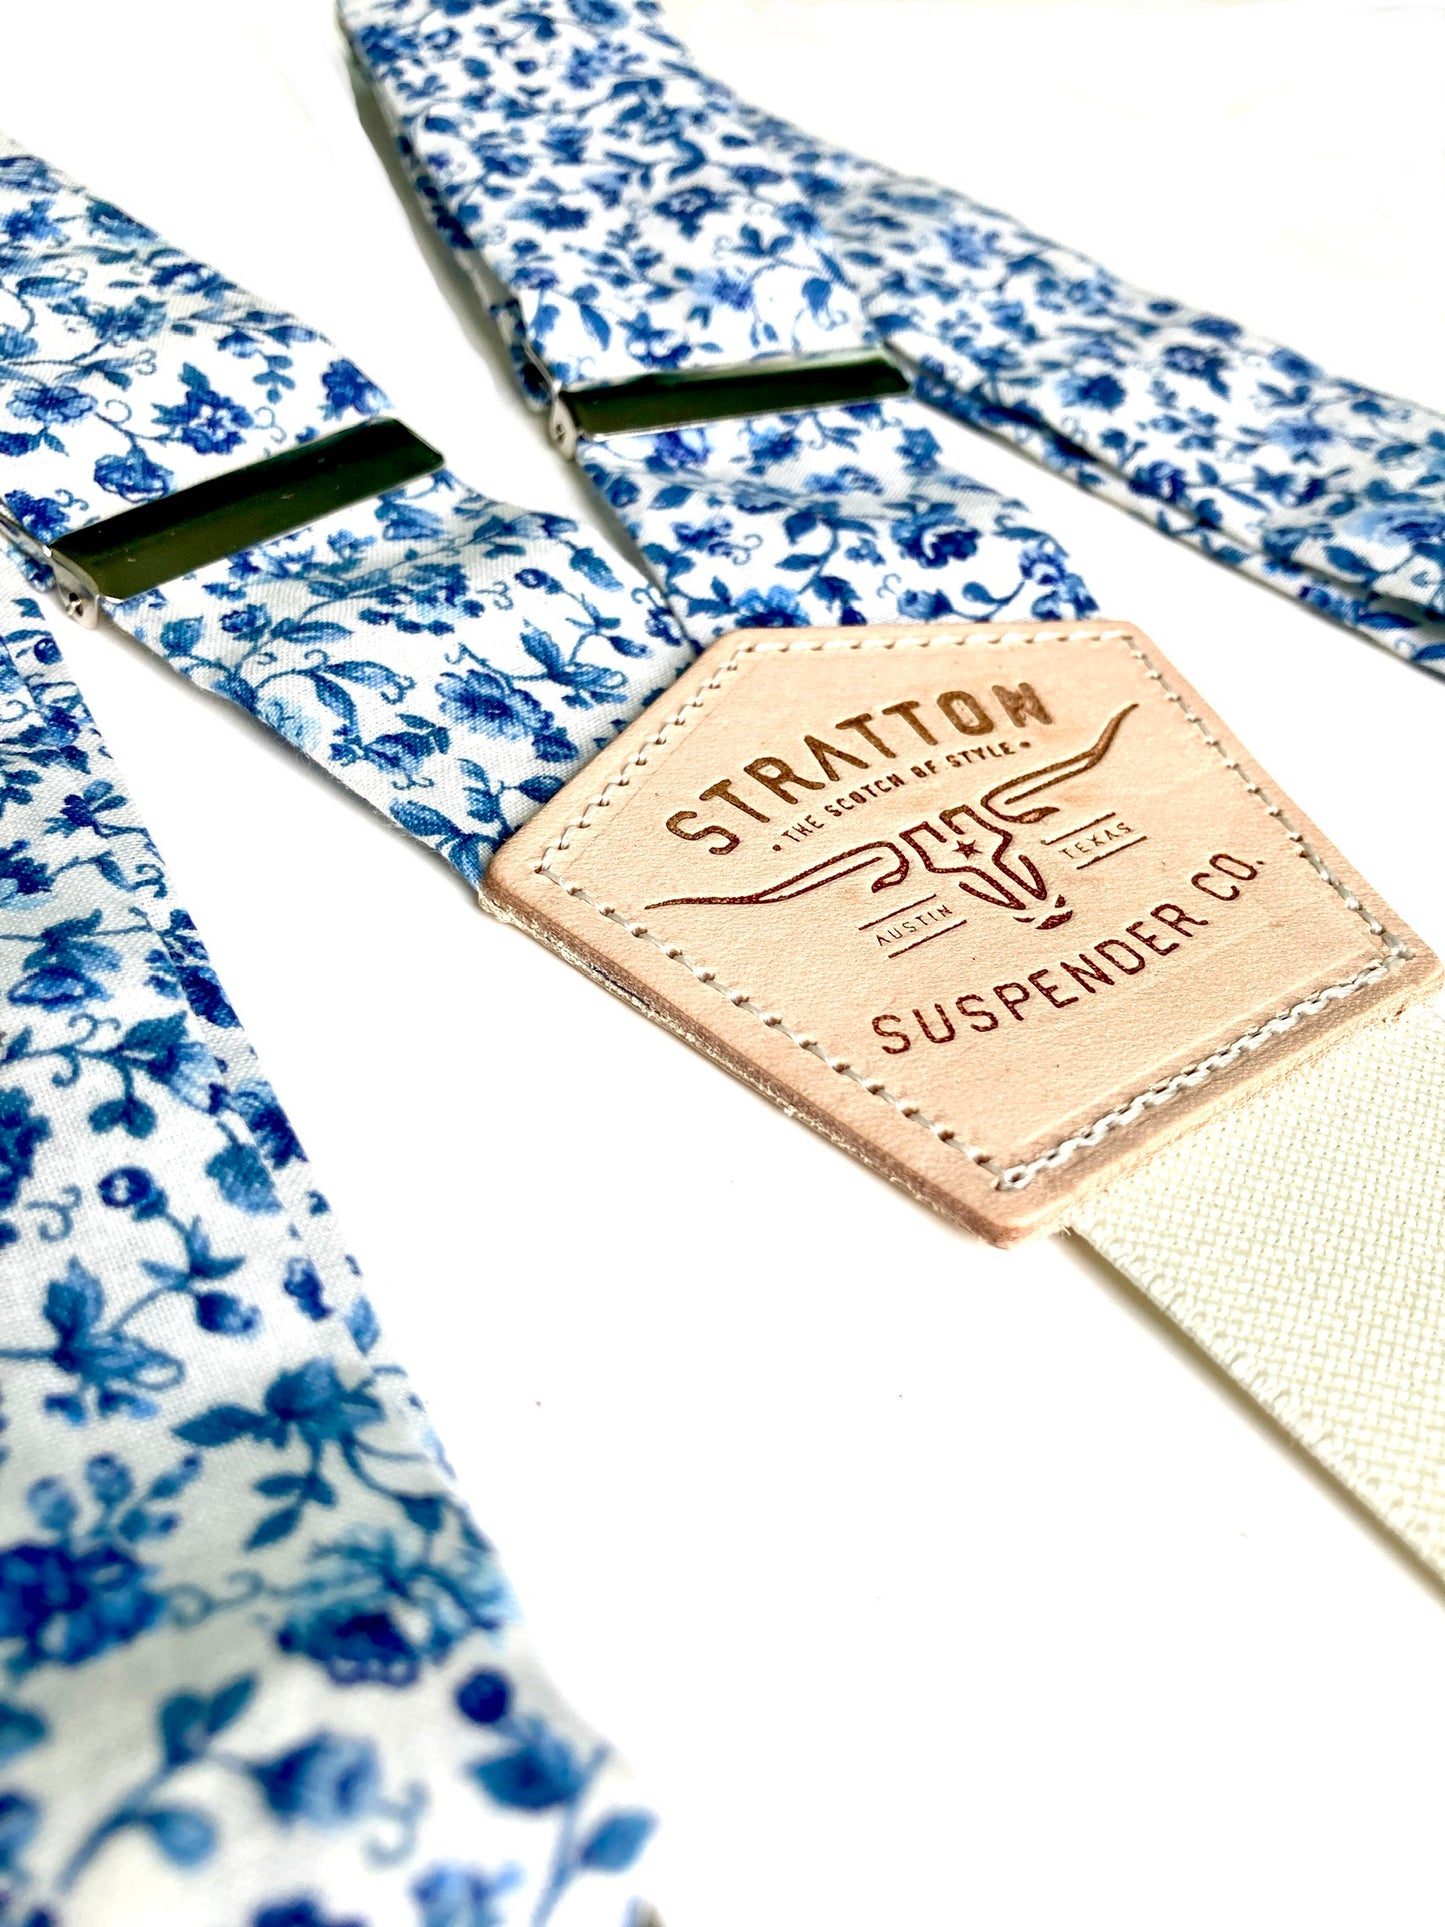 Stratton Suspender Co. Straps in Summertime Blue Floral 